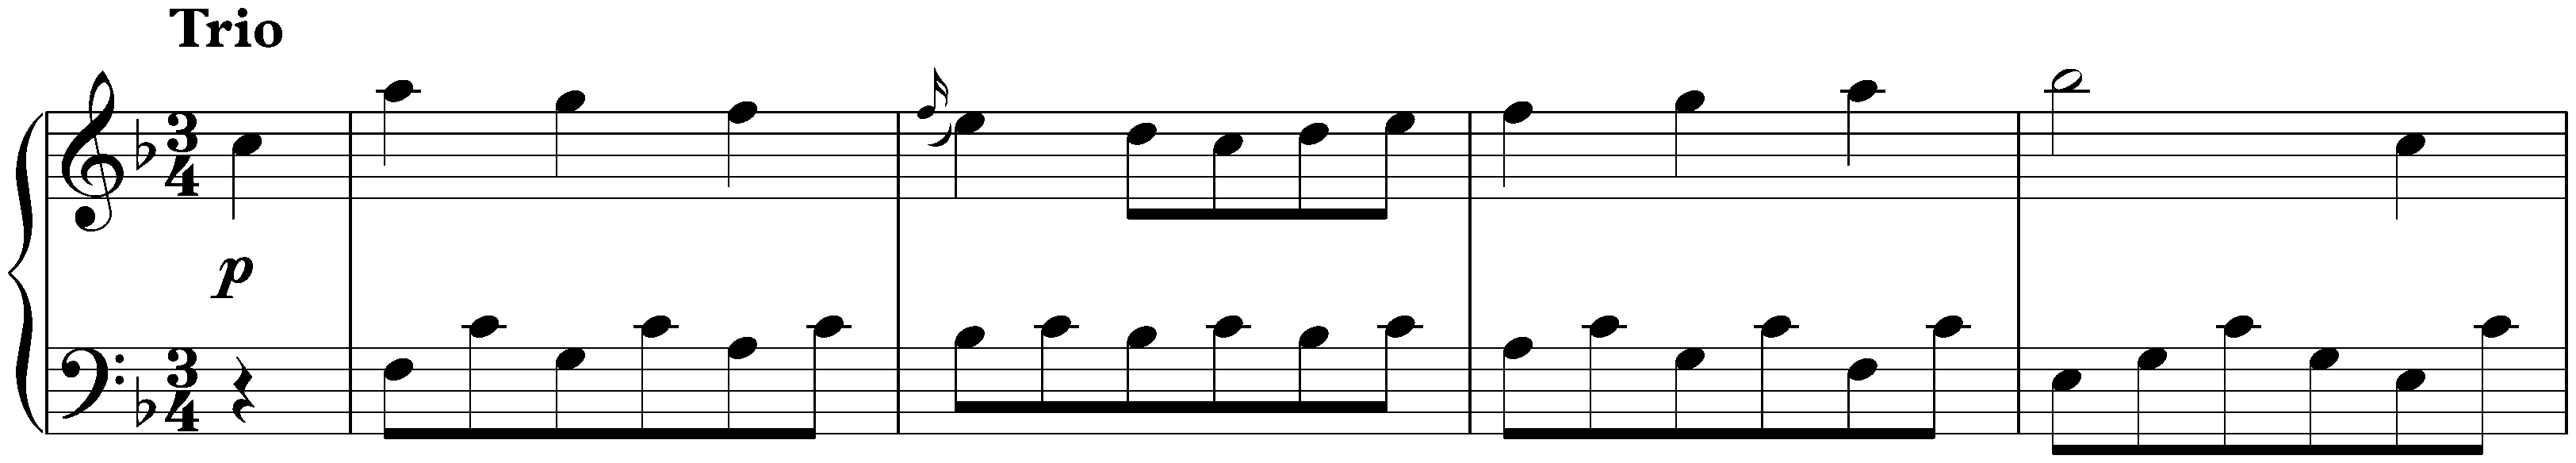 Eight Minuets, KV 315g; 1. C major